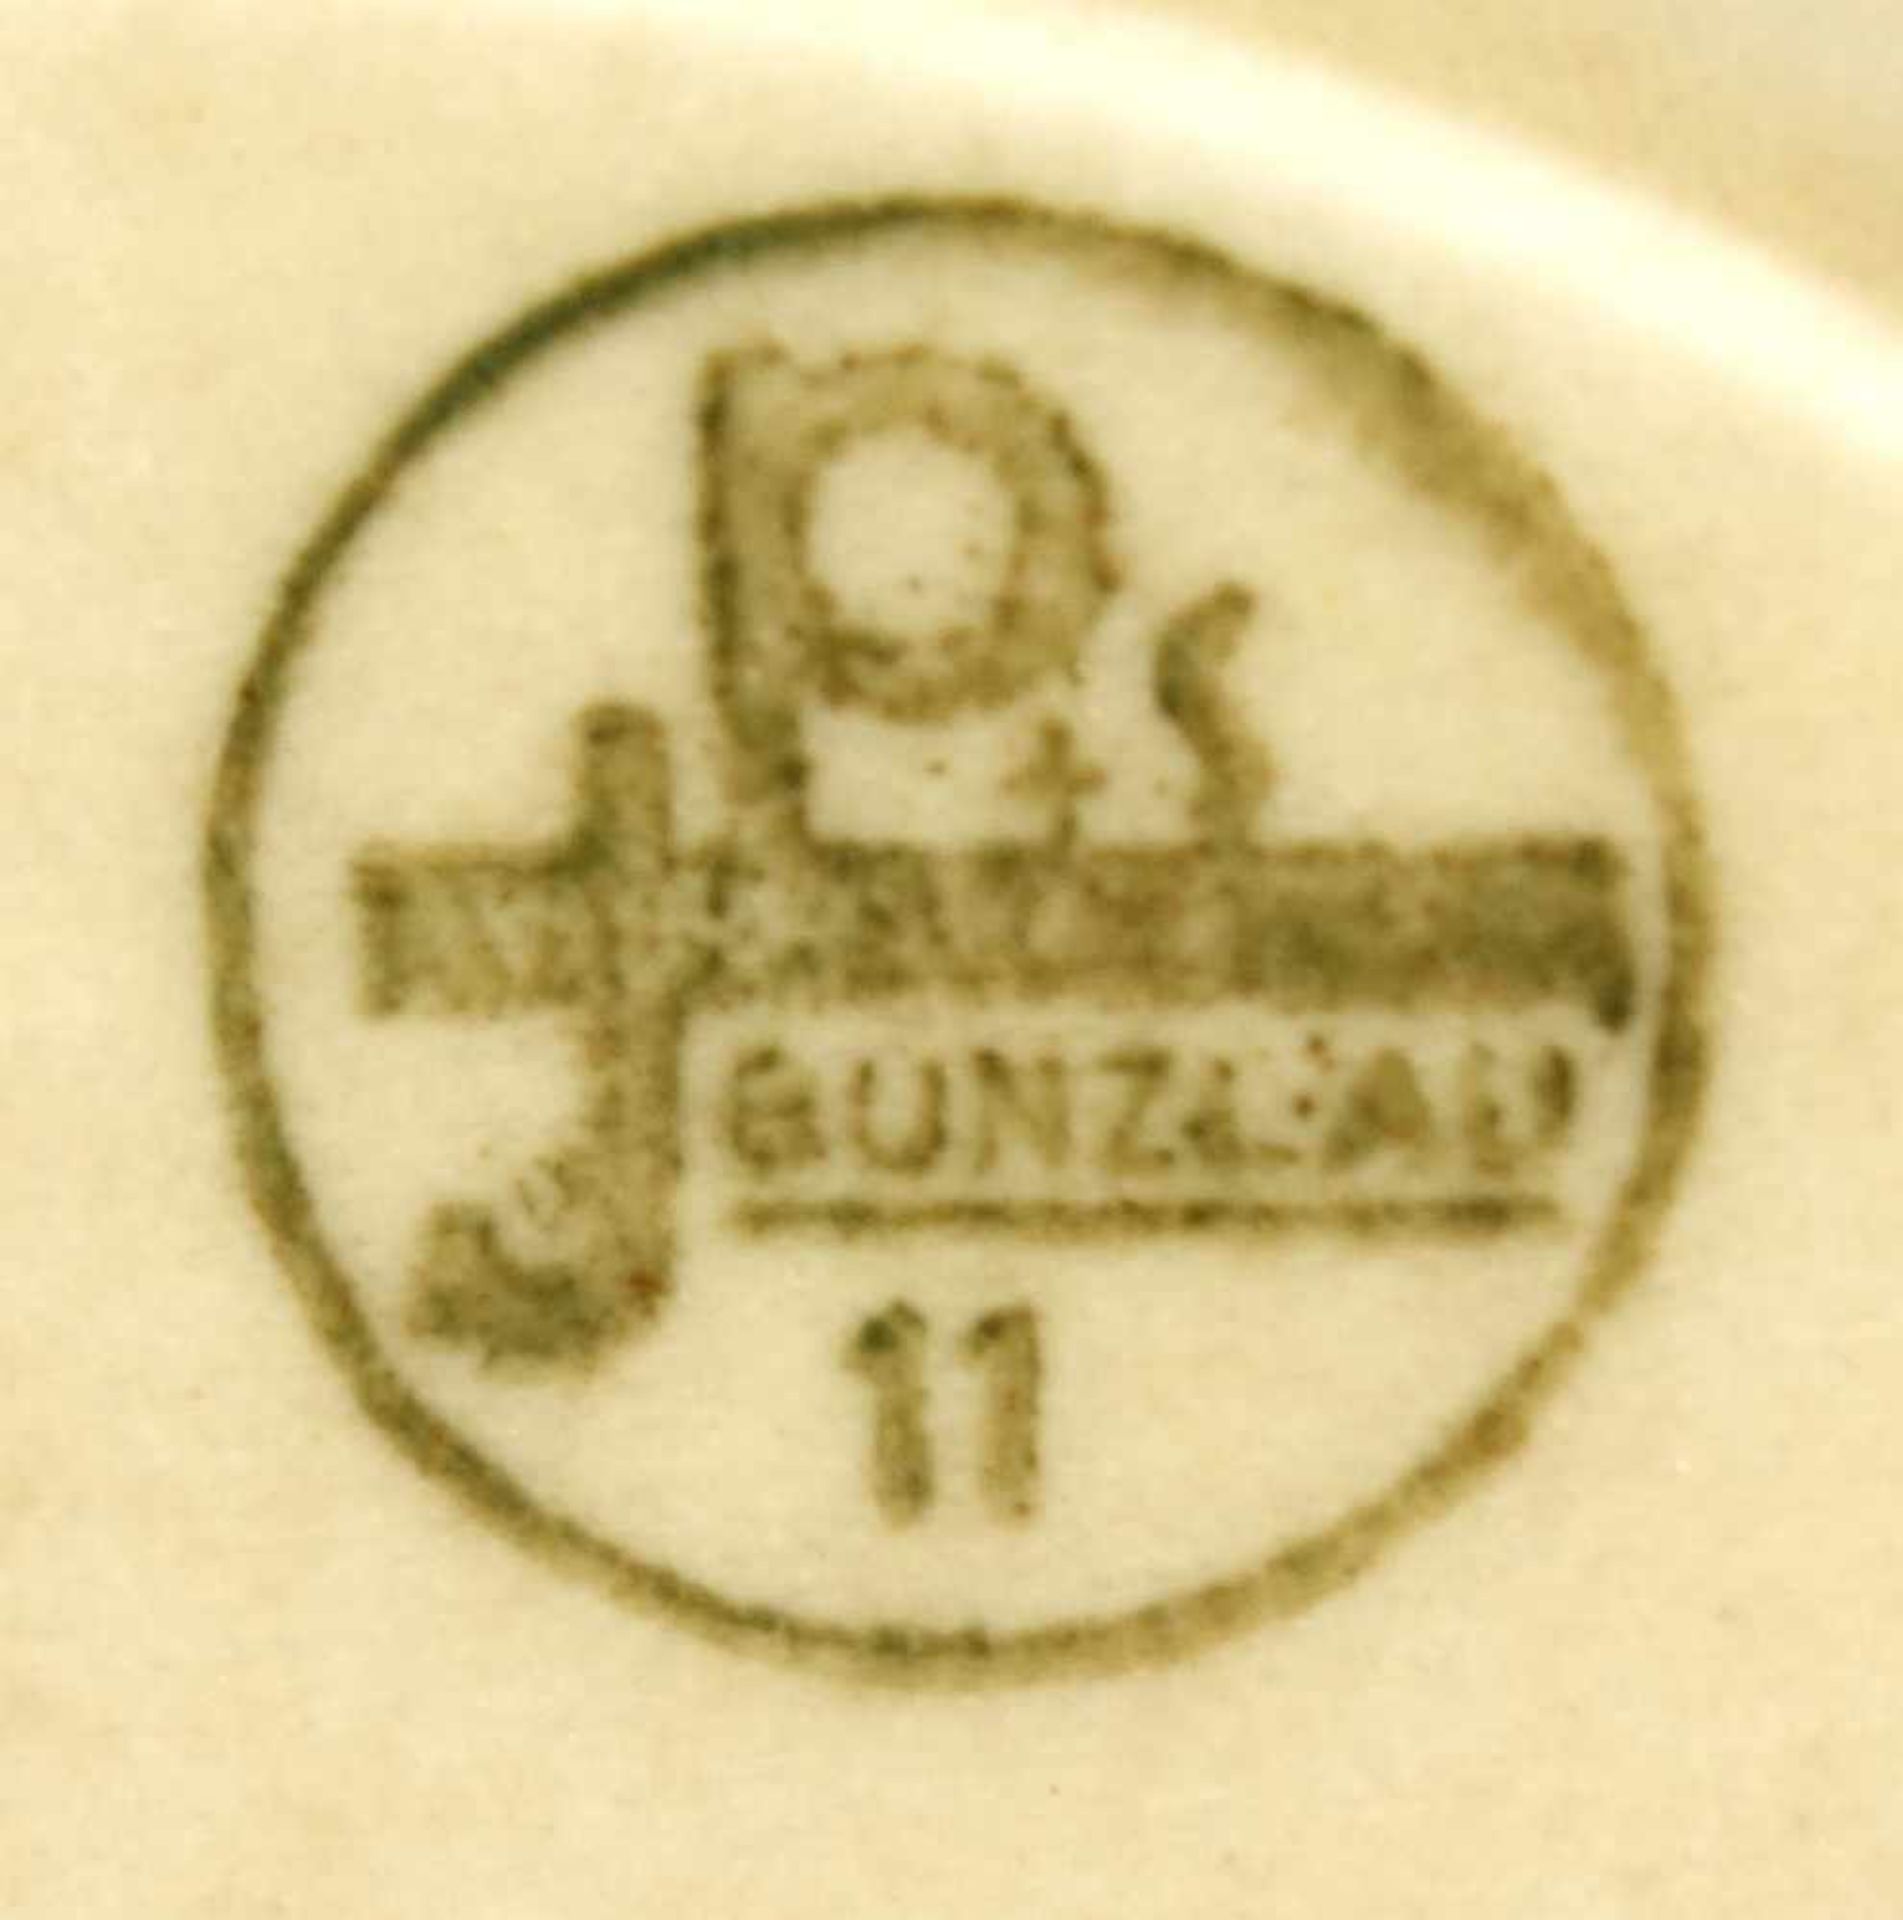 33-tlg.Teeservice, Feinsteinzeugfabrik Julius Paul & Sohn, Bunzlau, Marke 1932-45, Dekor 354 Rose, - Image 3 of 3